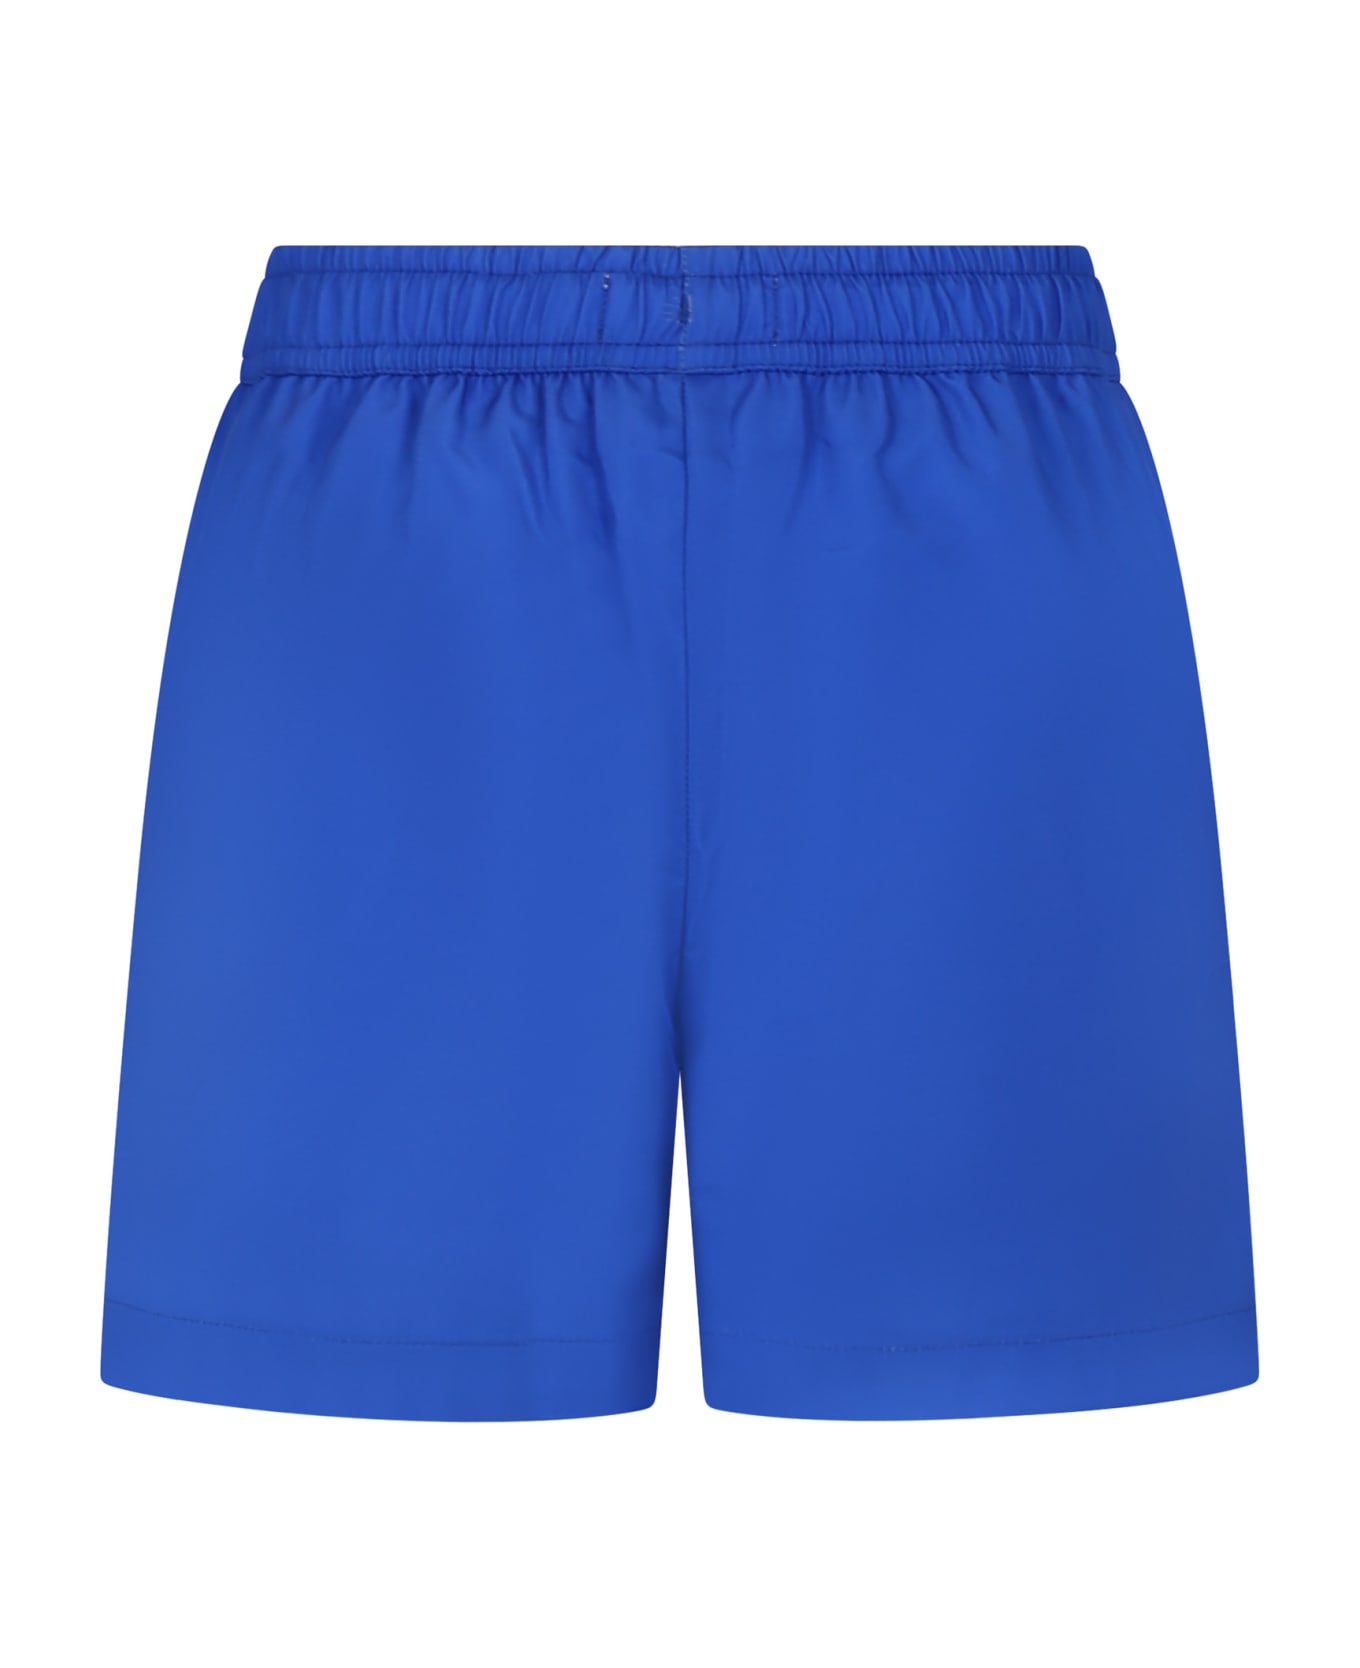 Moschino Light Blue Swim Shorts For Boy With Teddy Bear - Light Blue